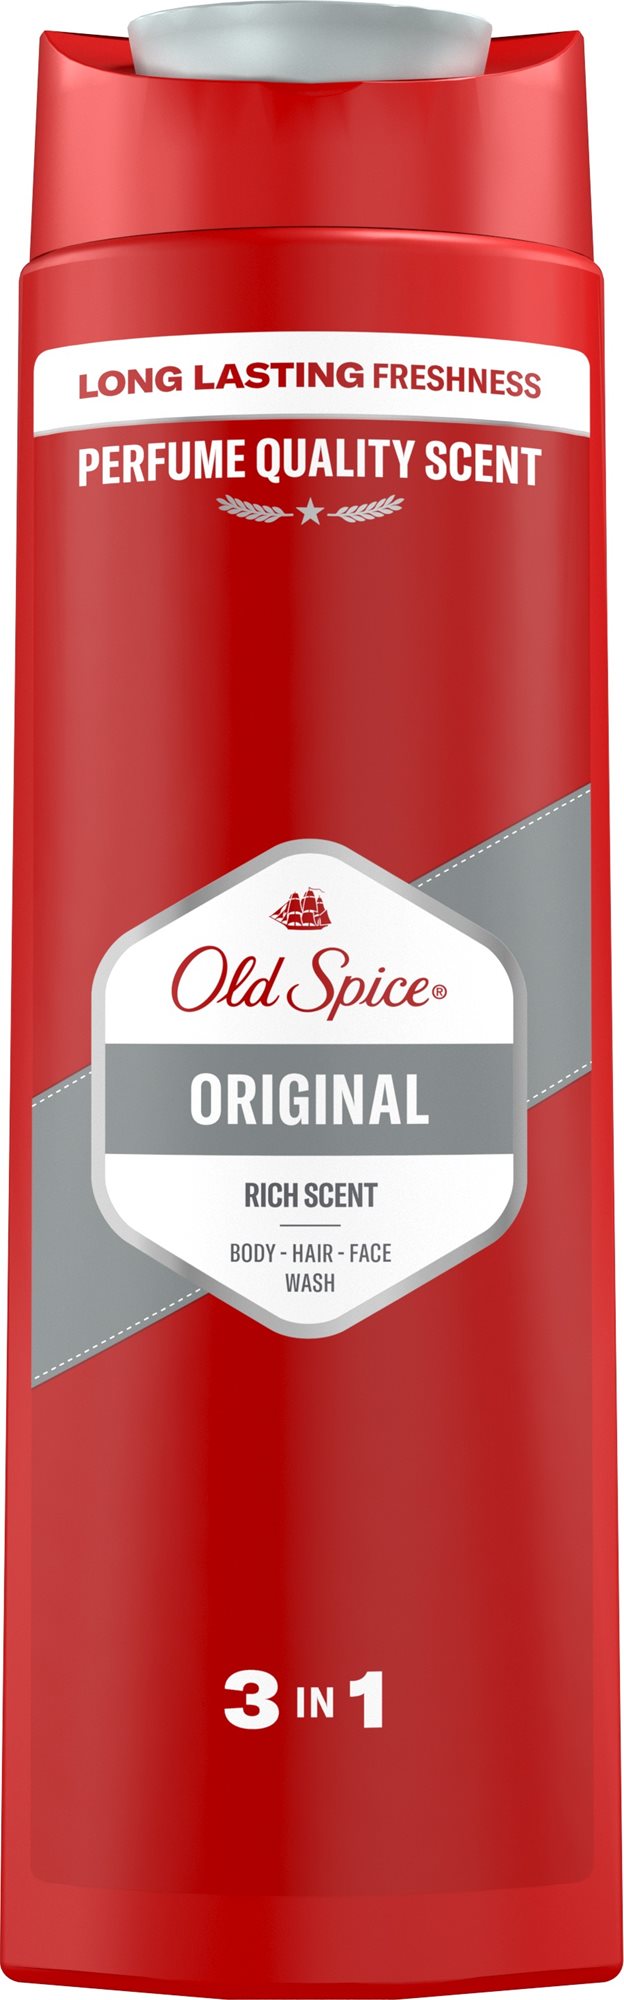 OLD SPICE Original 400 ml